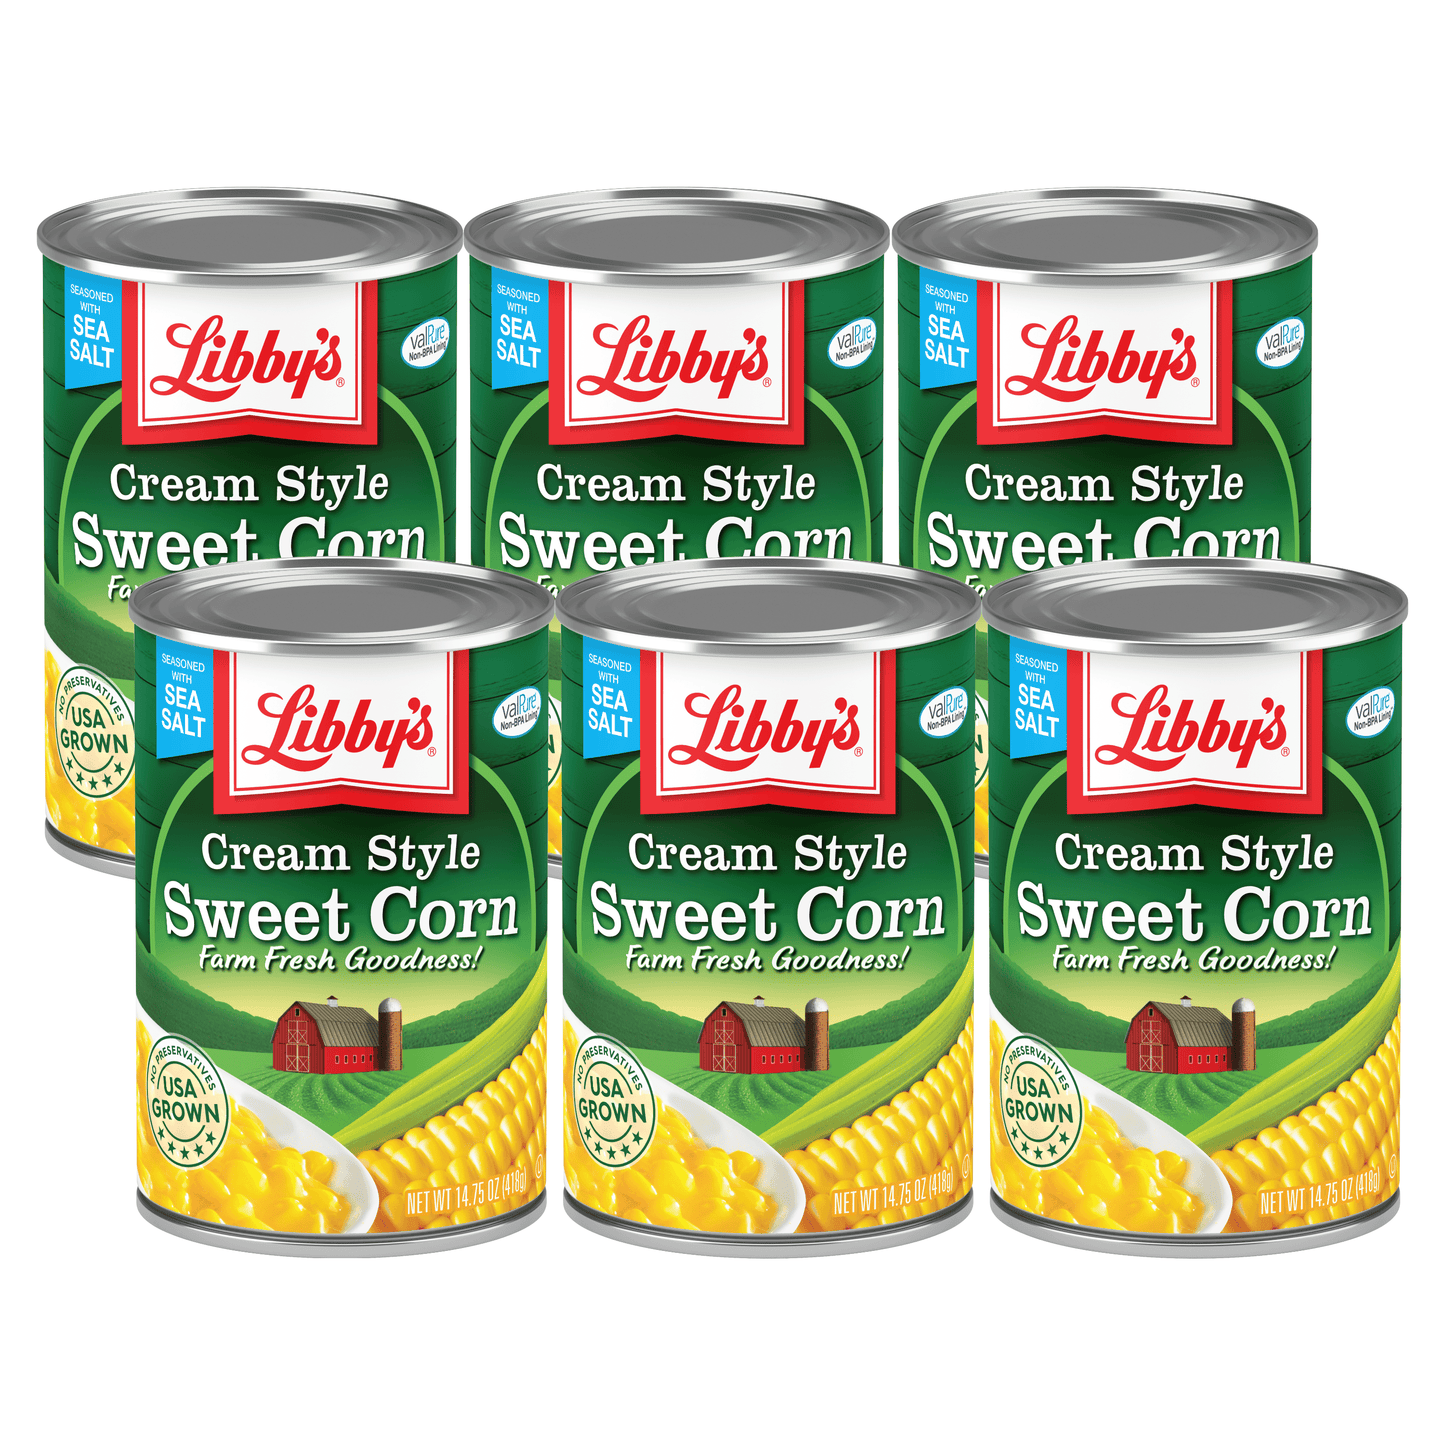 (6 Cans) Libby's Cream Style Corn, 14.75 oz